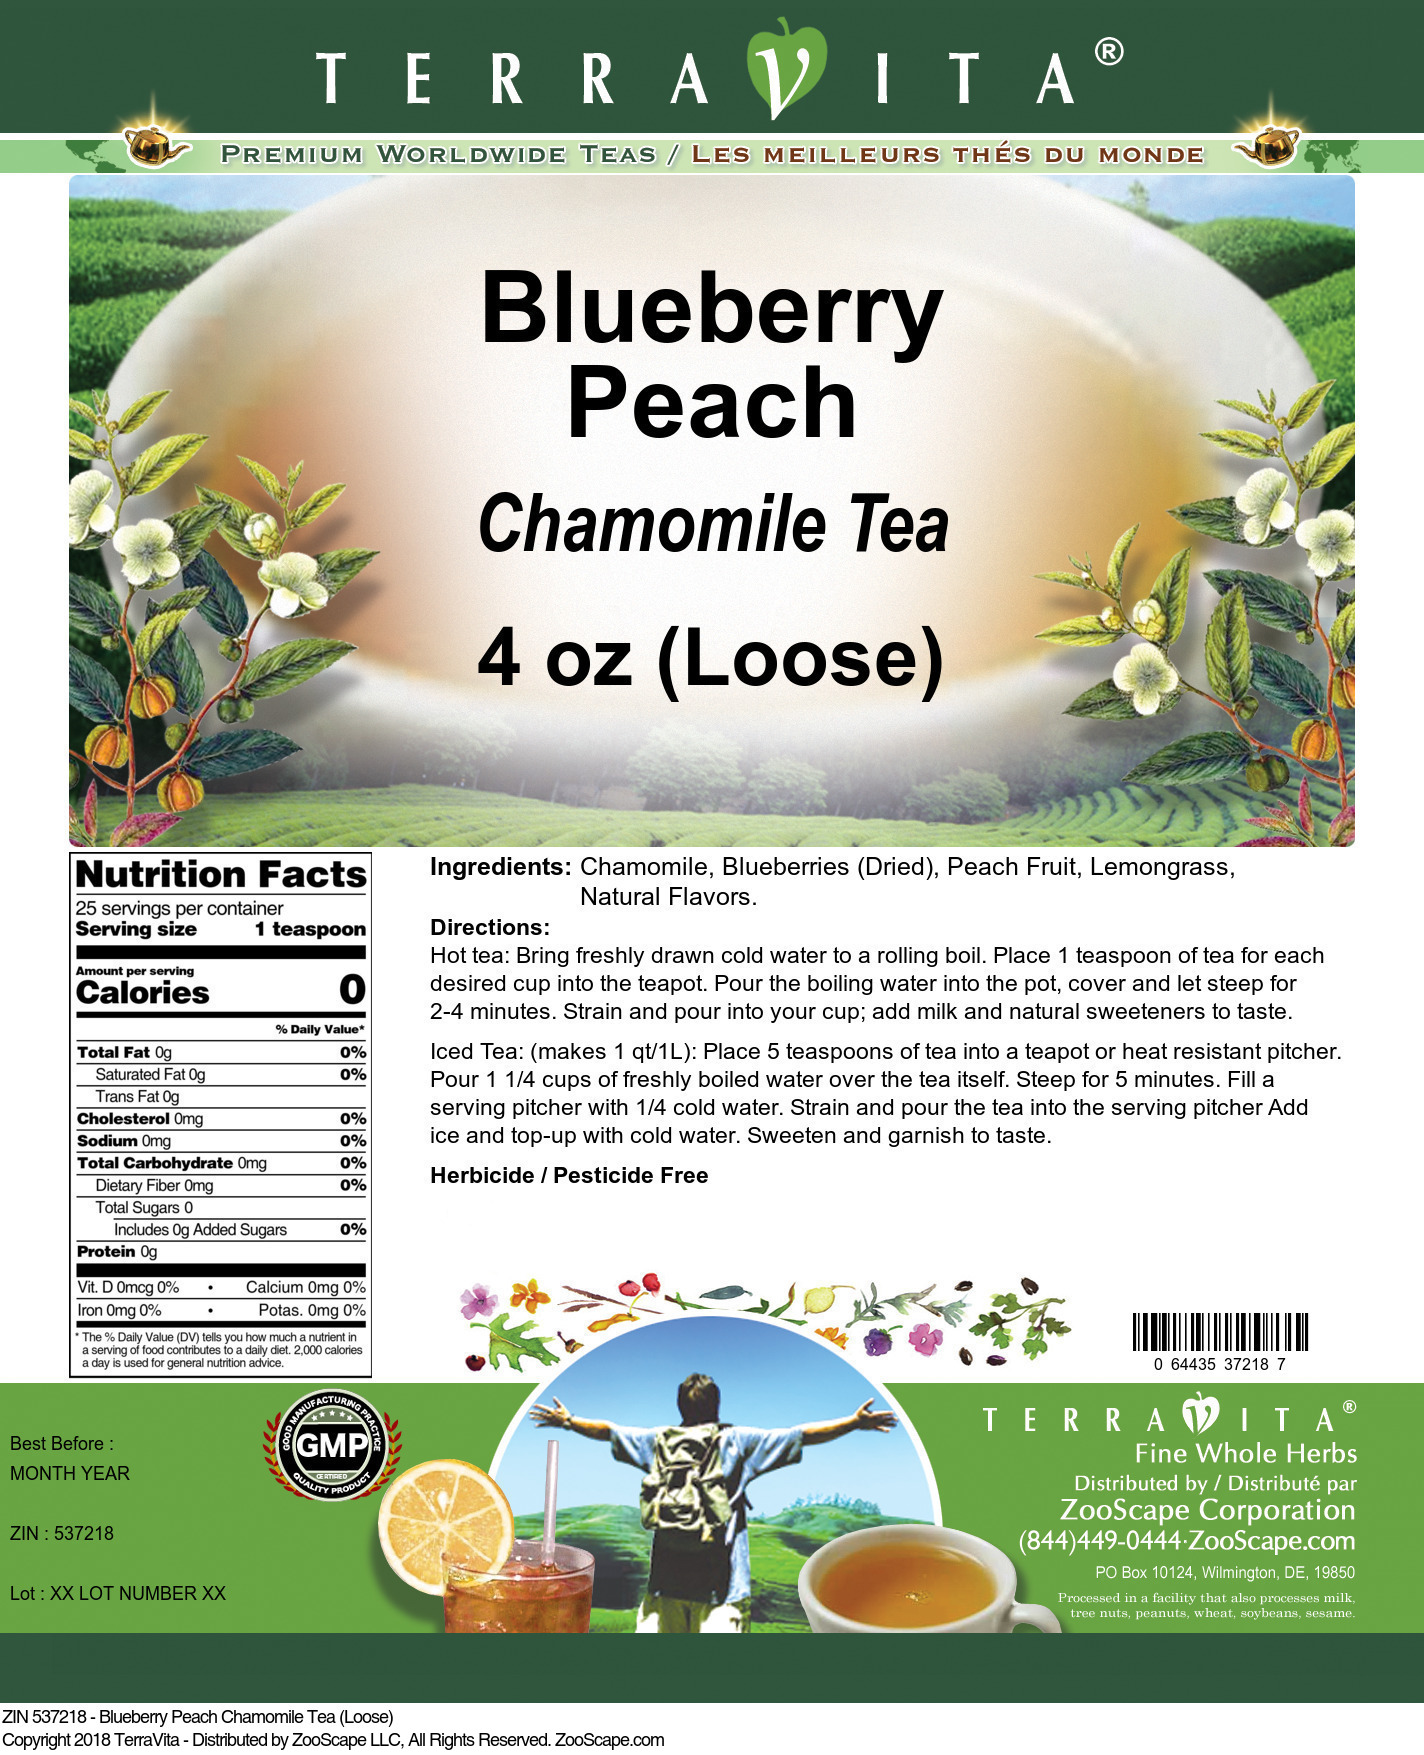 Blueberry Peach Chamomile Tea (Loose) - Label